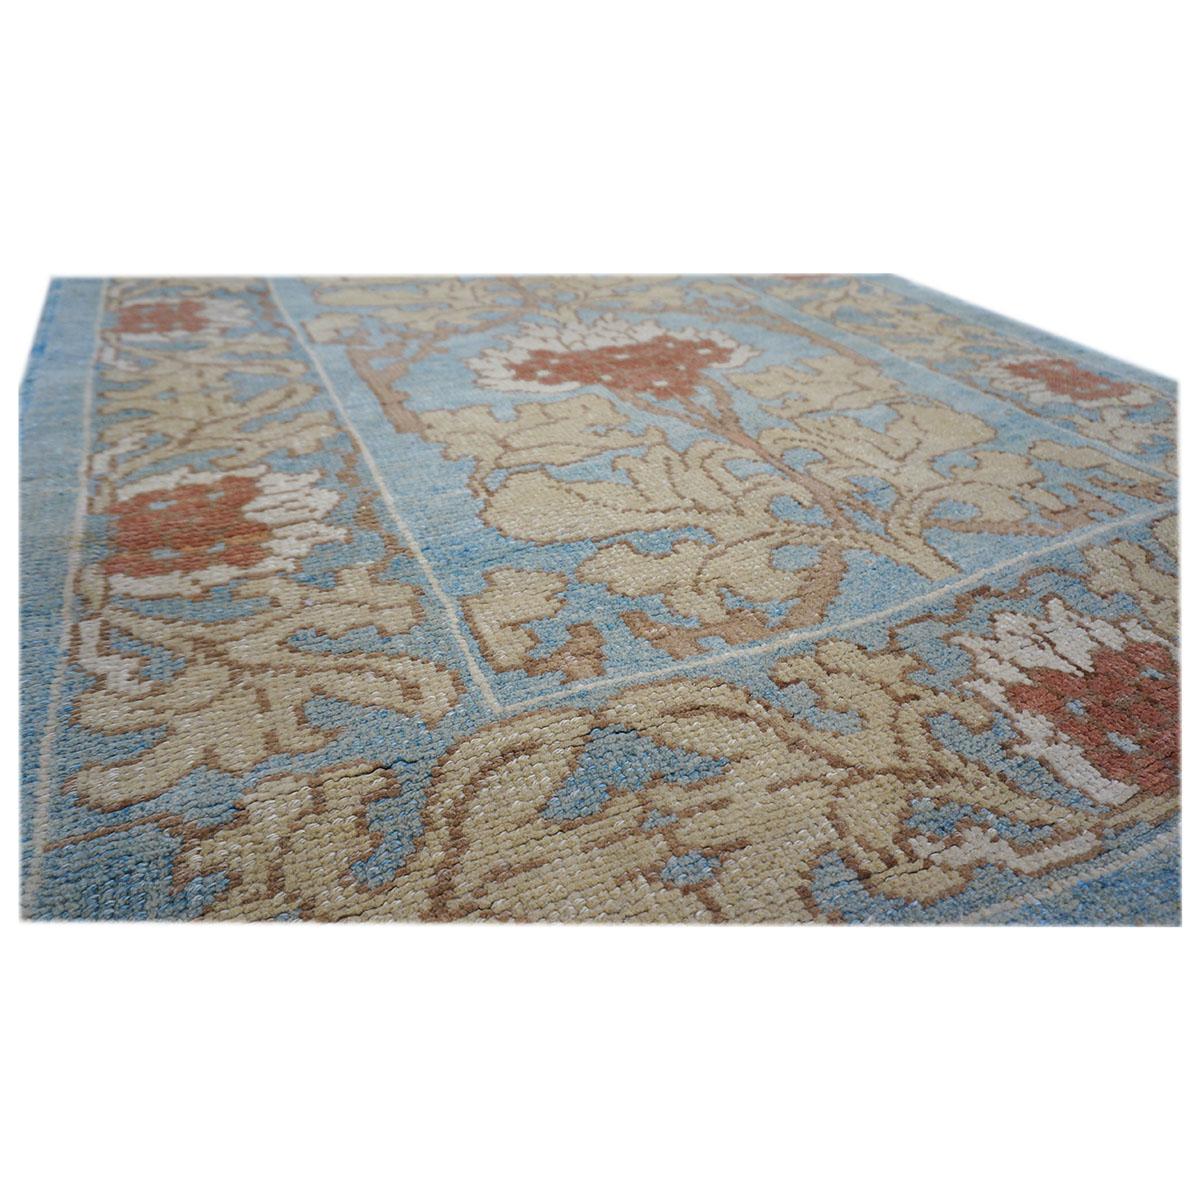 Oushak 21st Century William Morris Donegal Carpet 4.4x5.7 Light Blue, Tan, & Rust For Sale